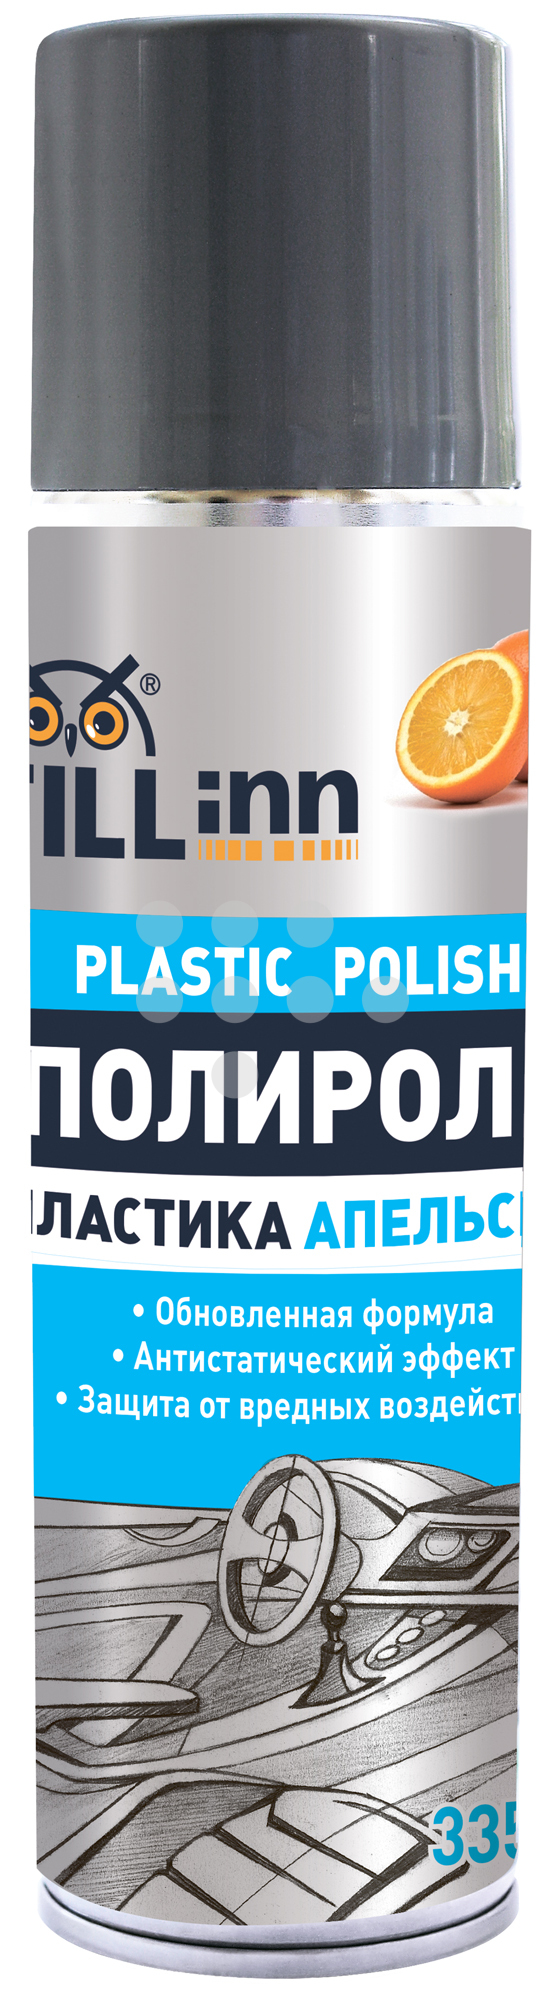 FL012 FILL INN Полироль пластика (для приборной панели) апельсин, 335 мл (аэрозоль)